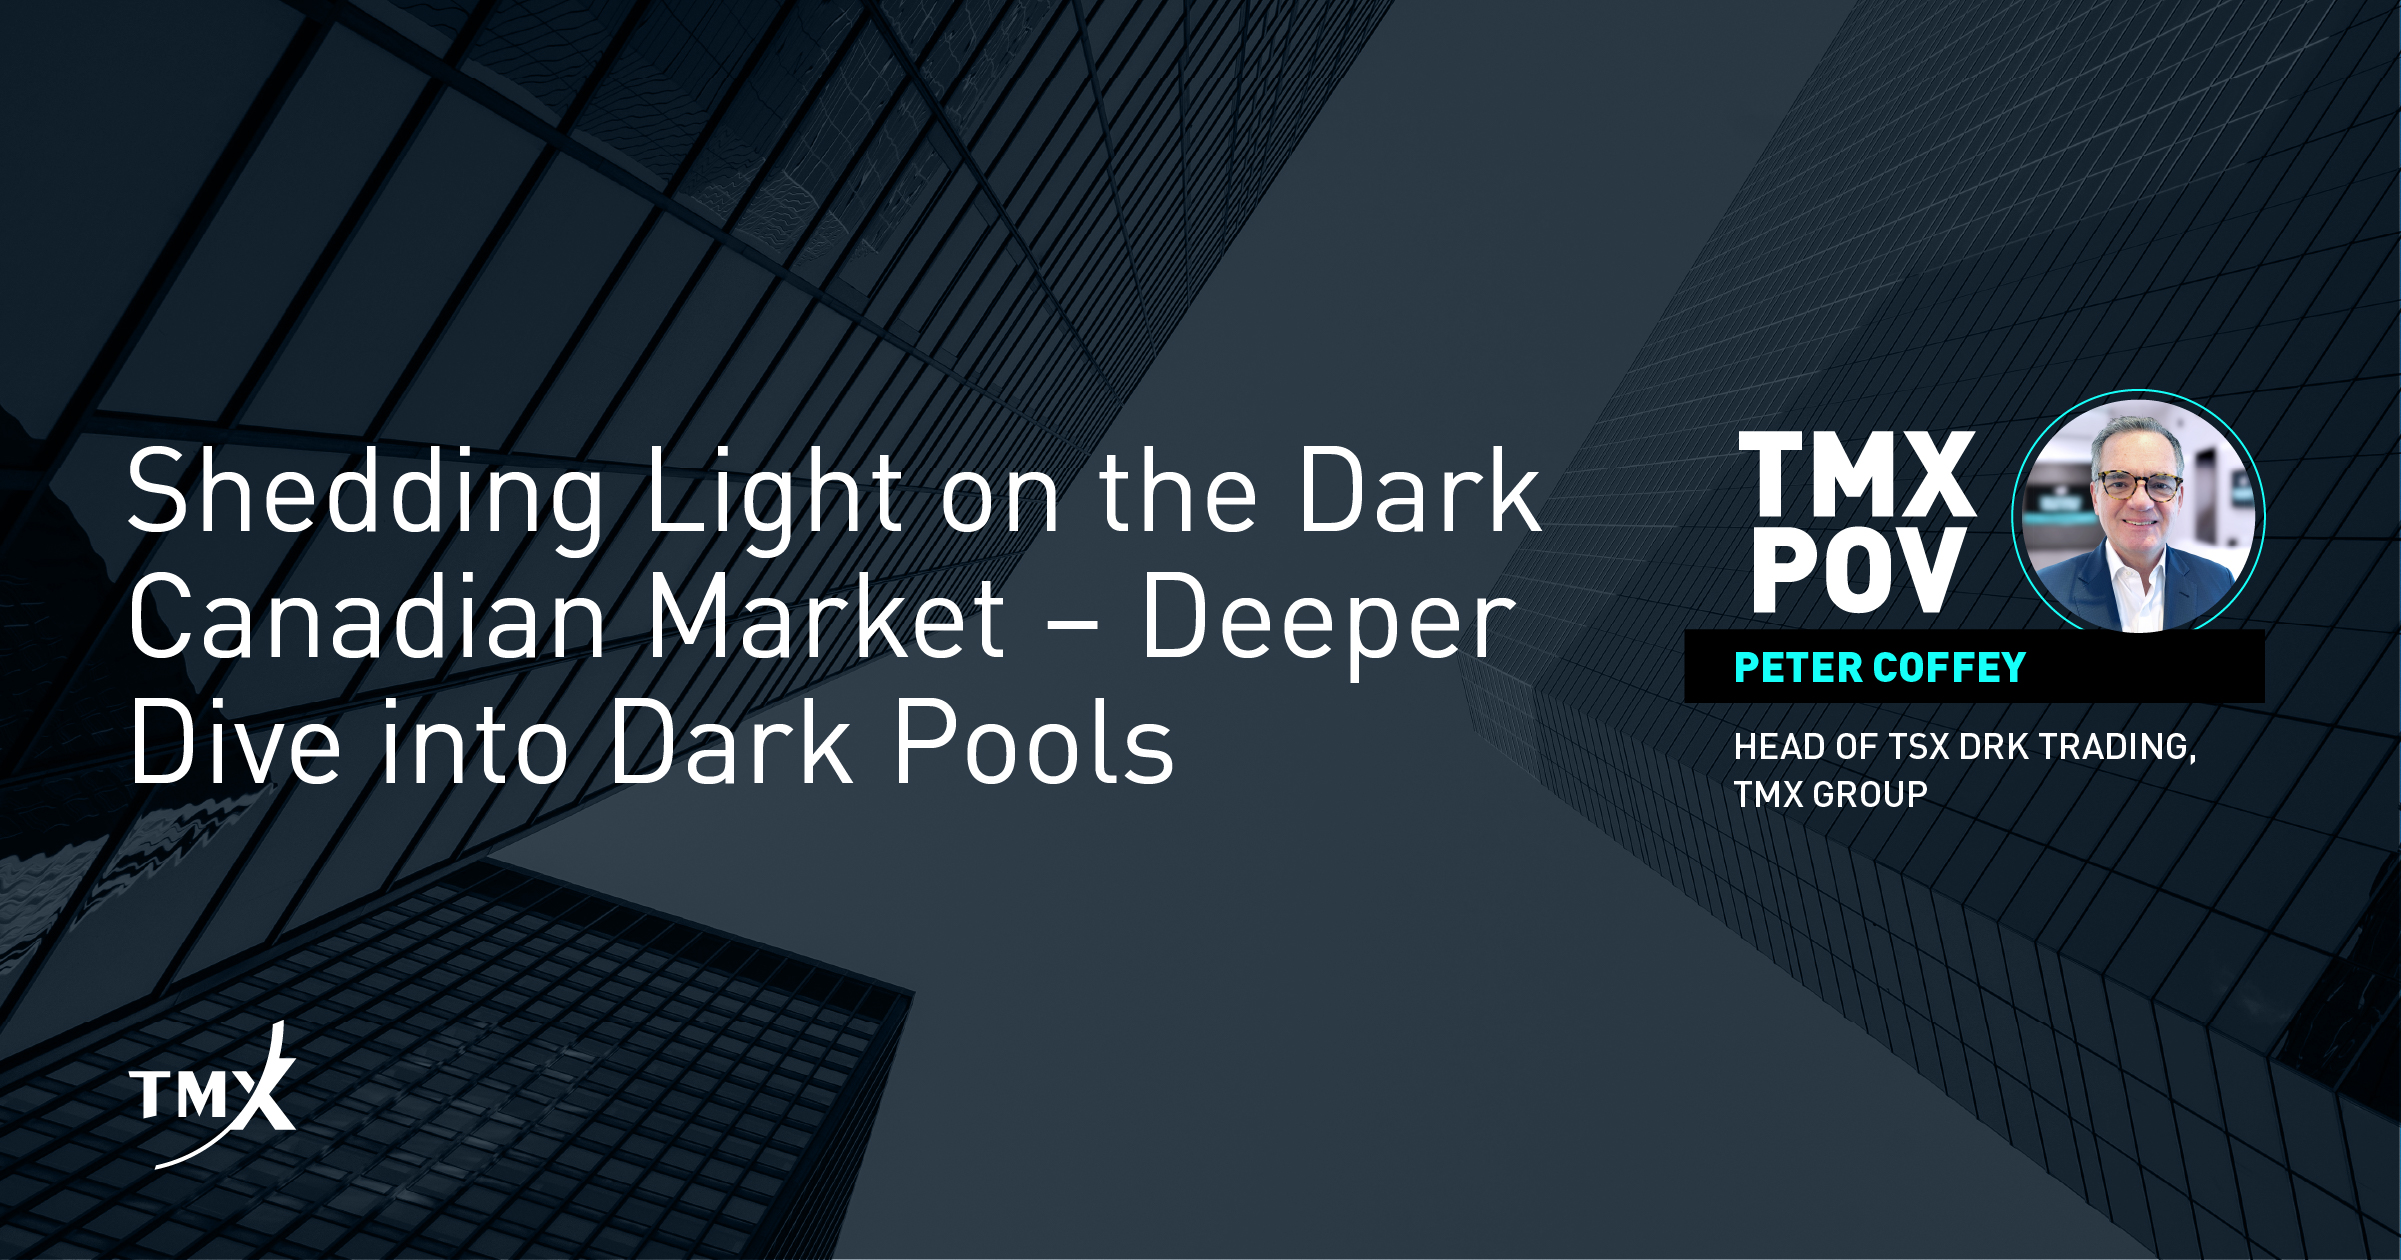 TMX POV - Shedding Light on the Dark Canadian Market – Deeper Dive into Dark Pools